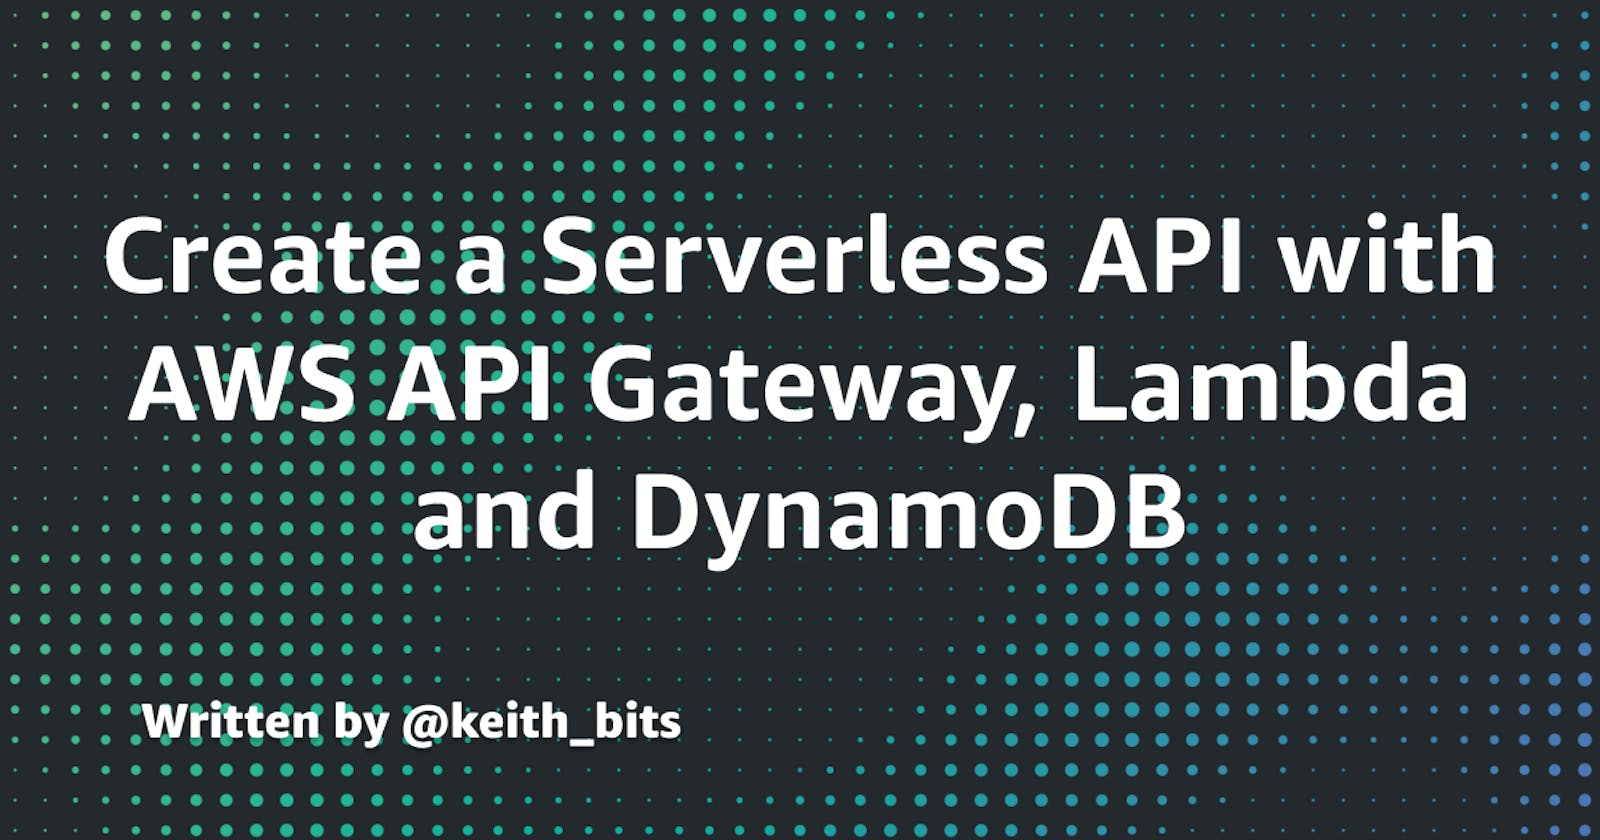 Create a Serverless API with AWS API Gateway, Lambda, and DynamoDB